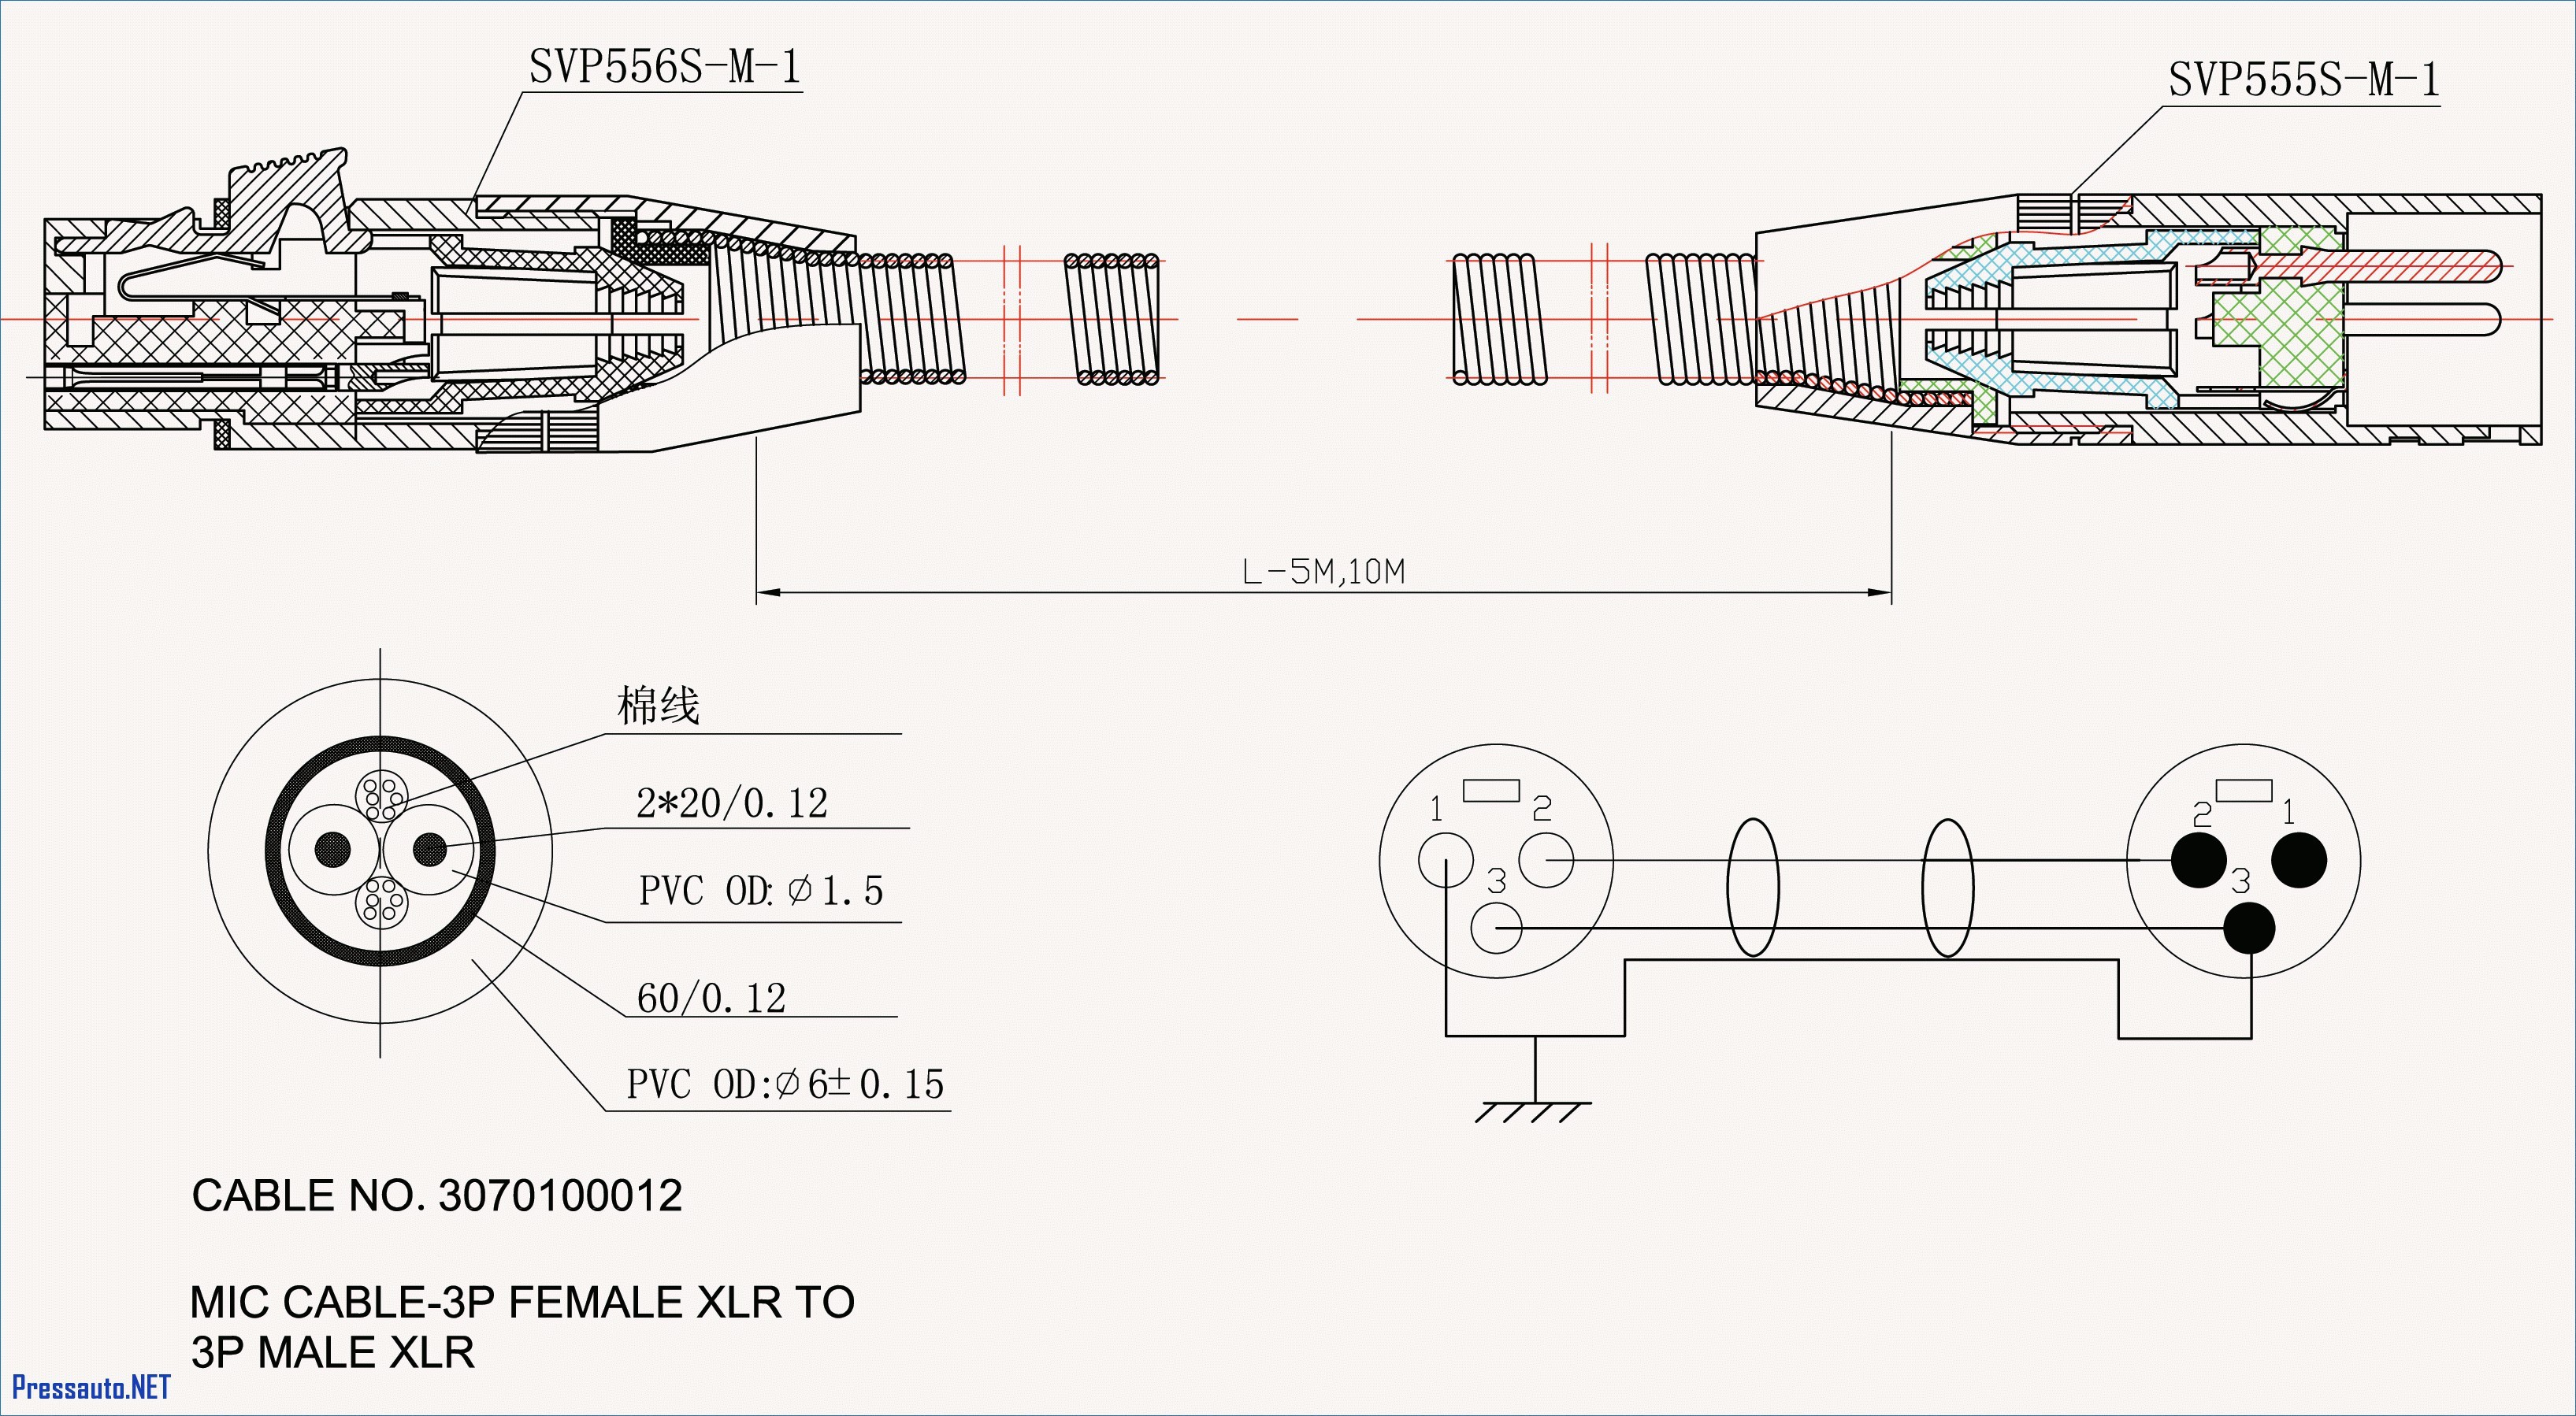 2000 Mercury Mountaineer Engine Diagram Gmc sonoma Diagram Schematics Wiring Diagrams • Of 2000 Mercury Mountaineer Engine Diagram